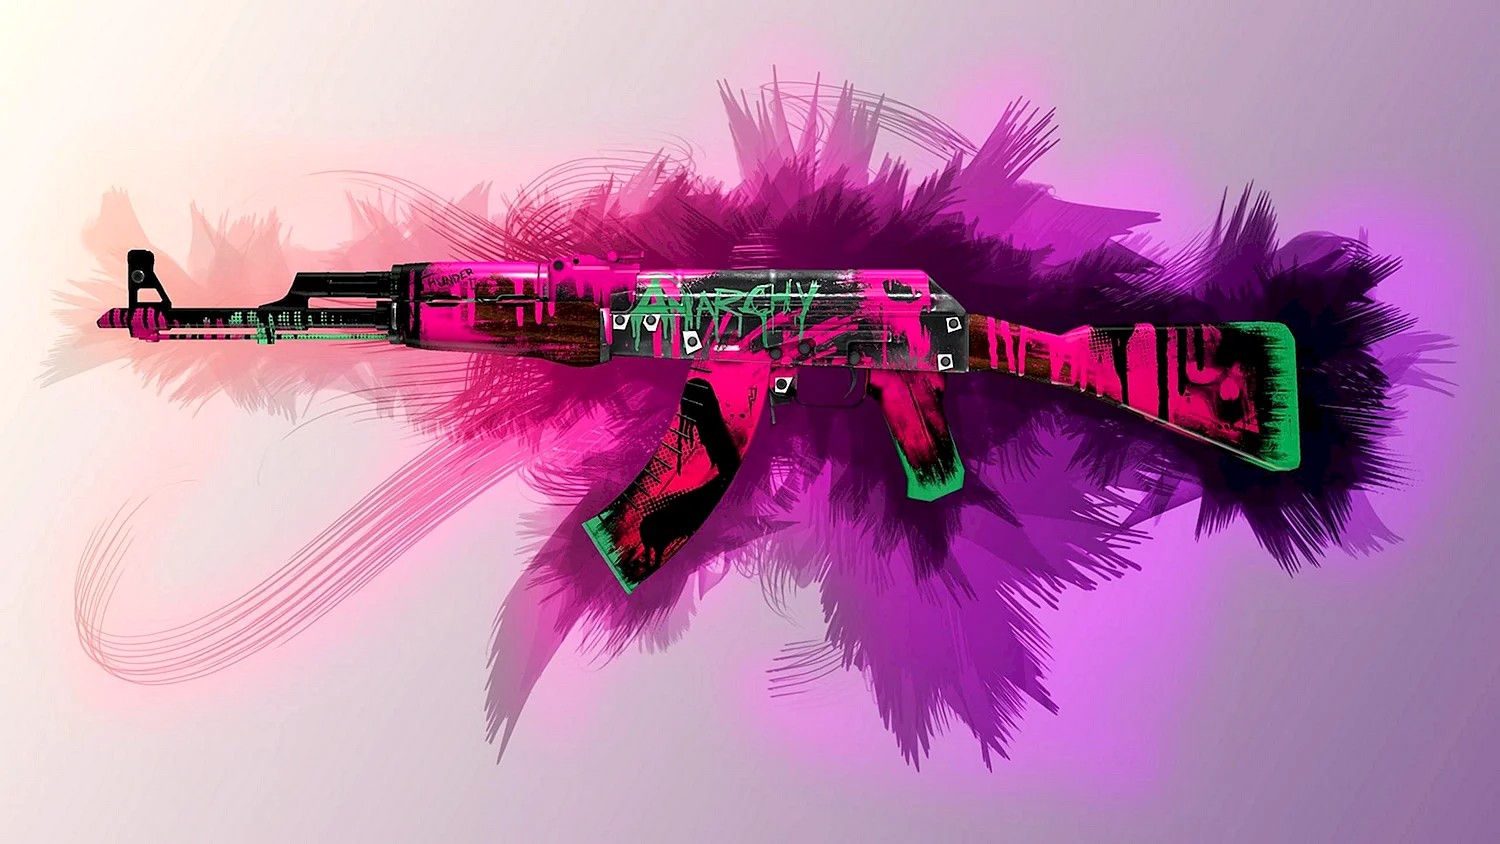 AK-47 | неоновая революция